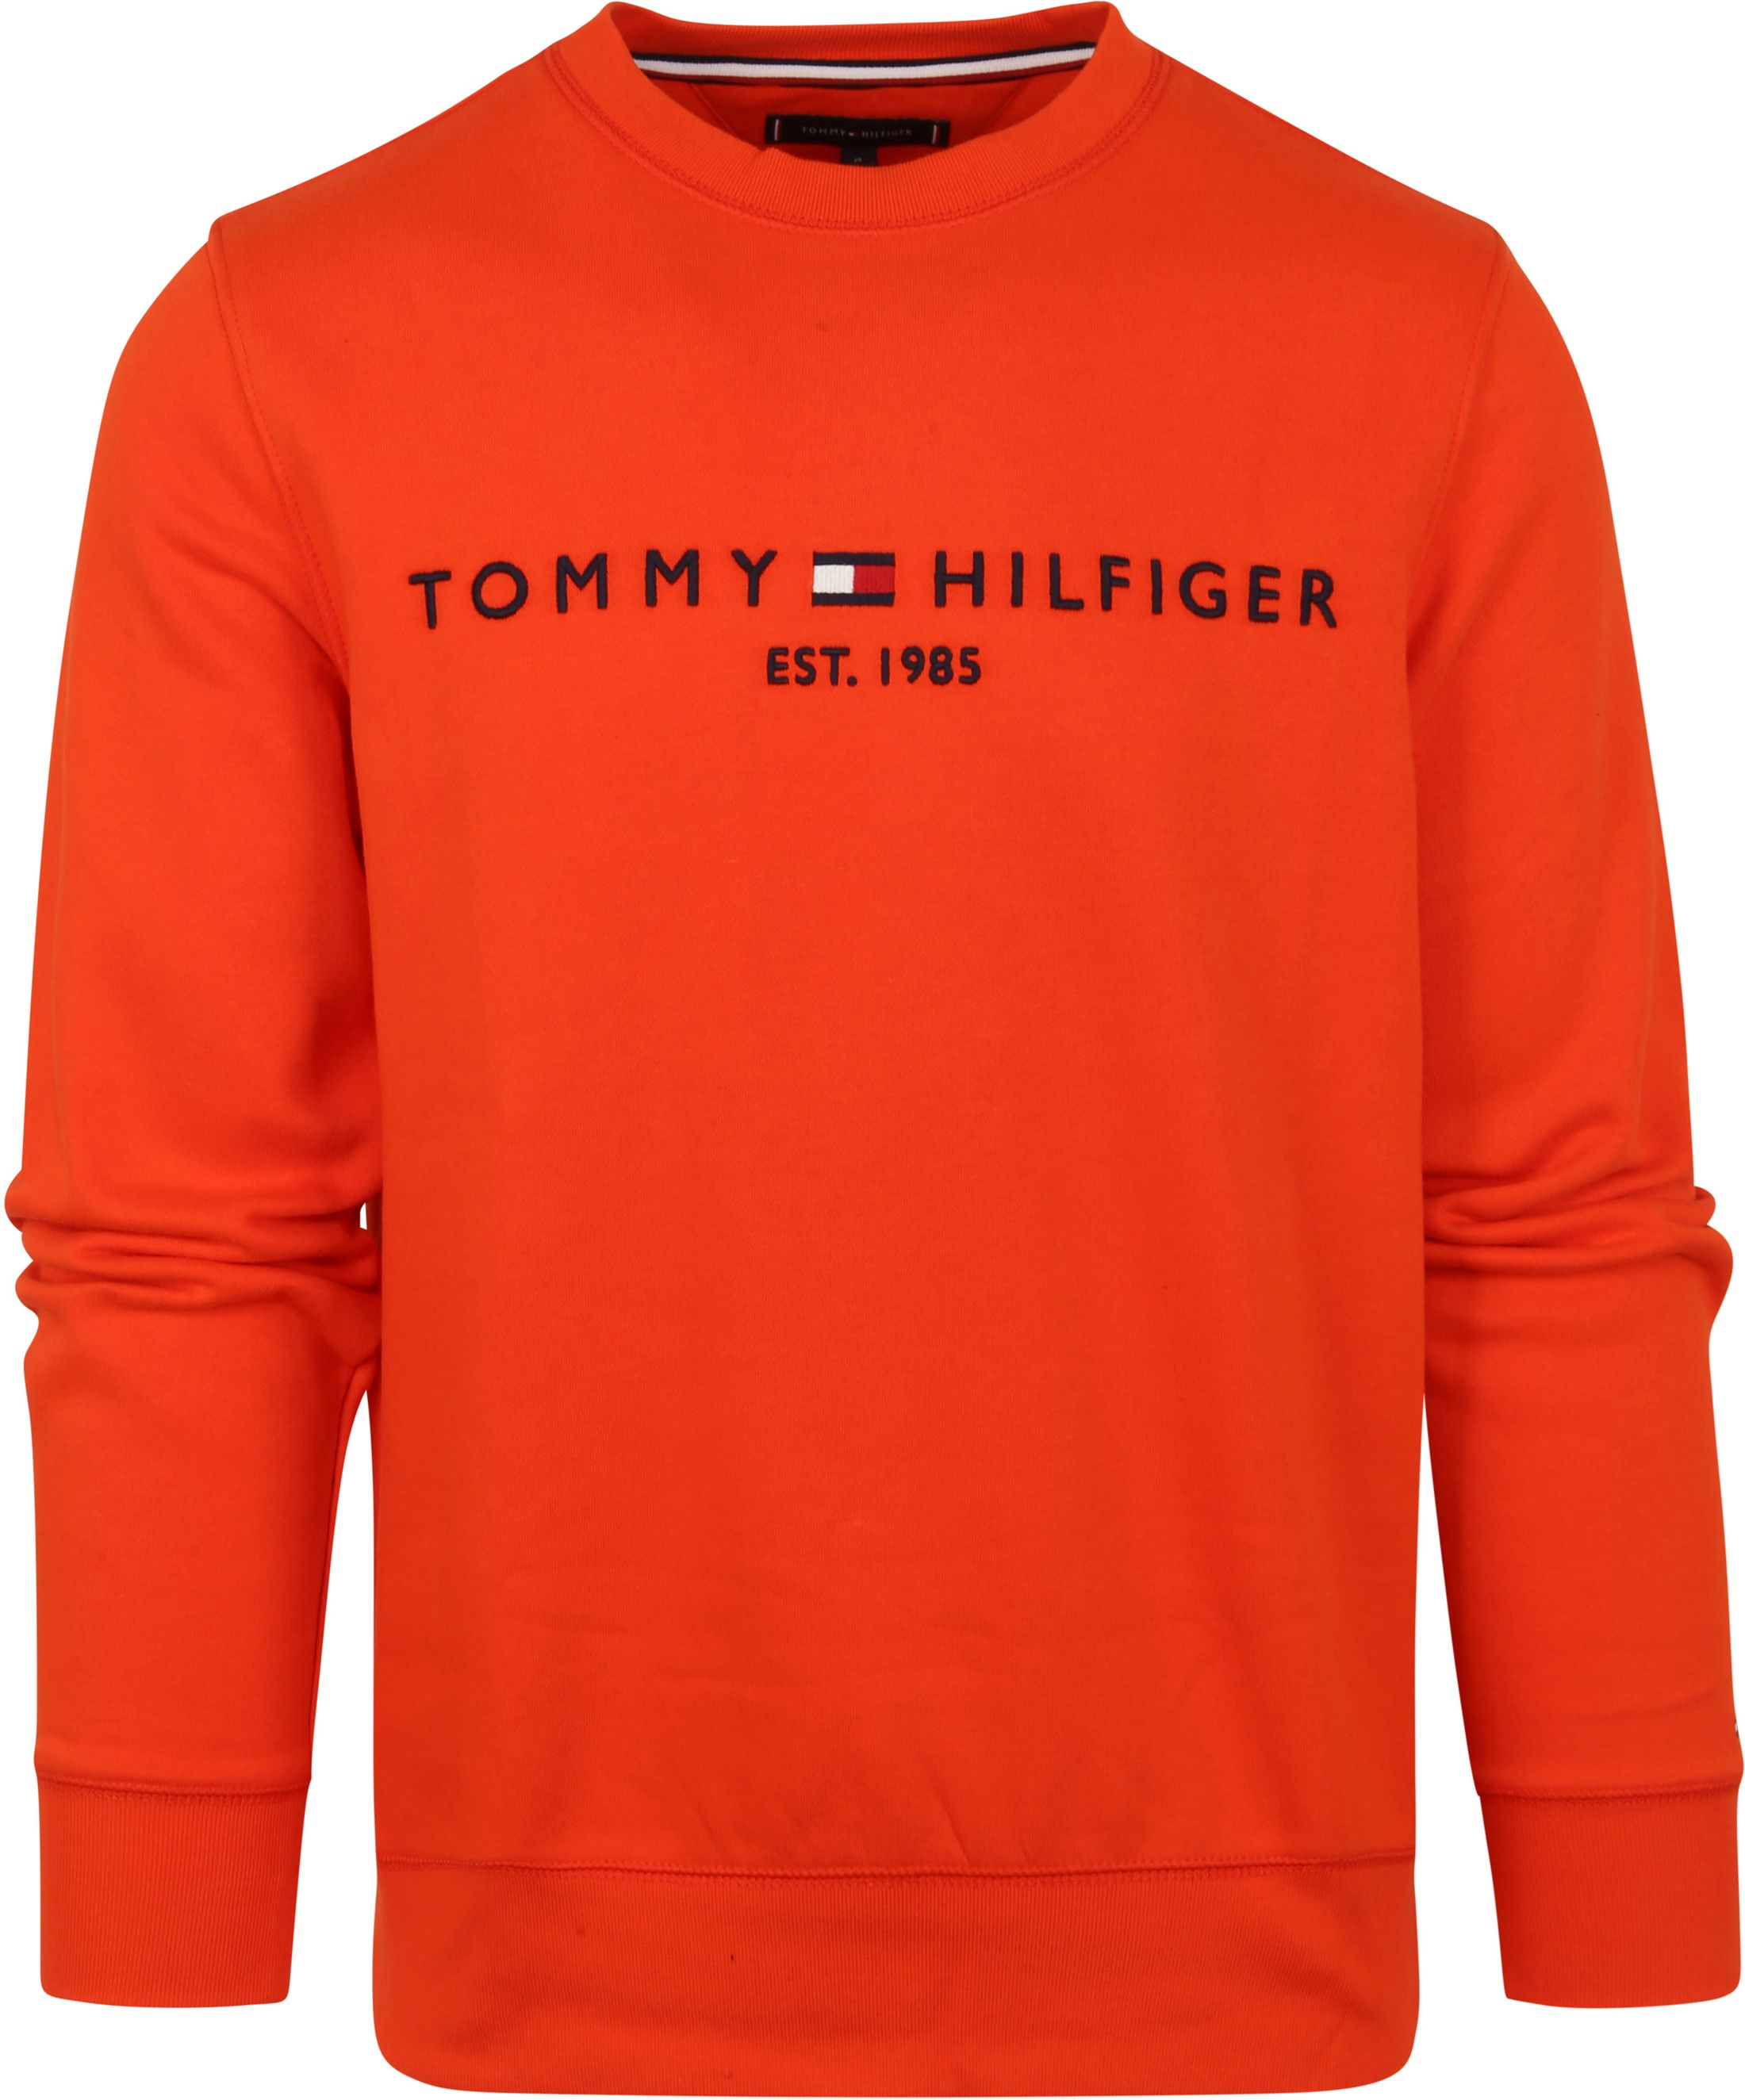 Tommy Hilfiger Sweater Logo Orange size L